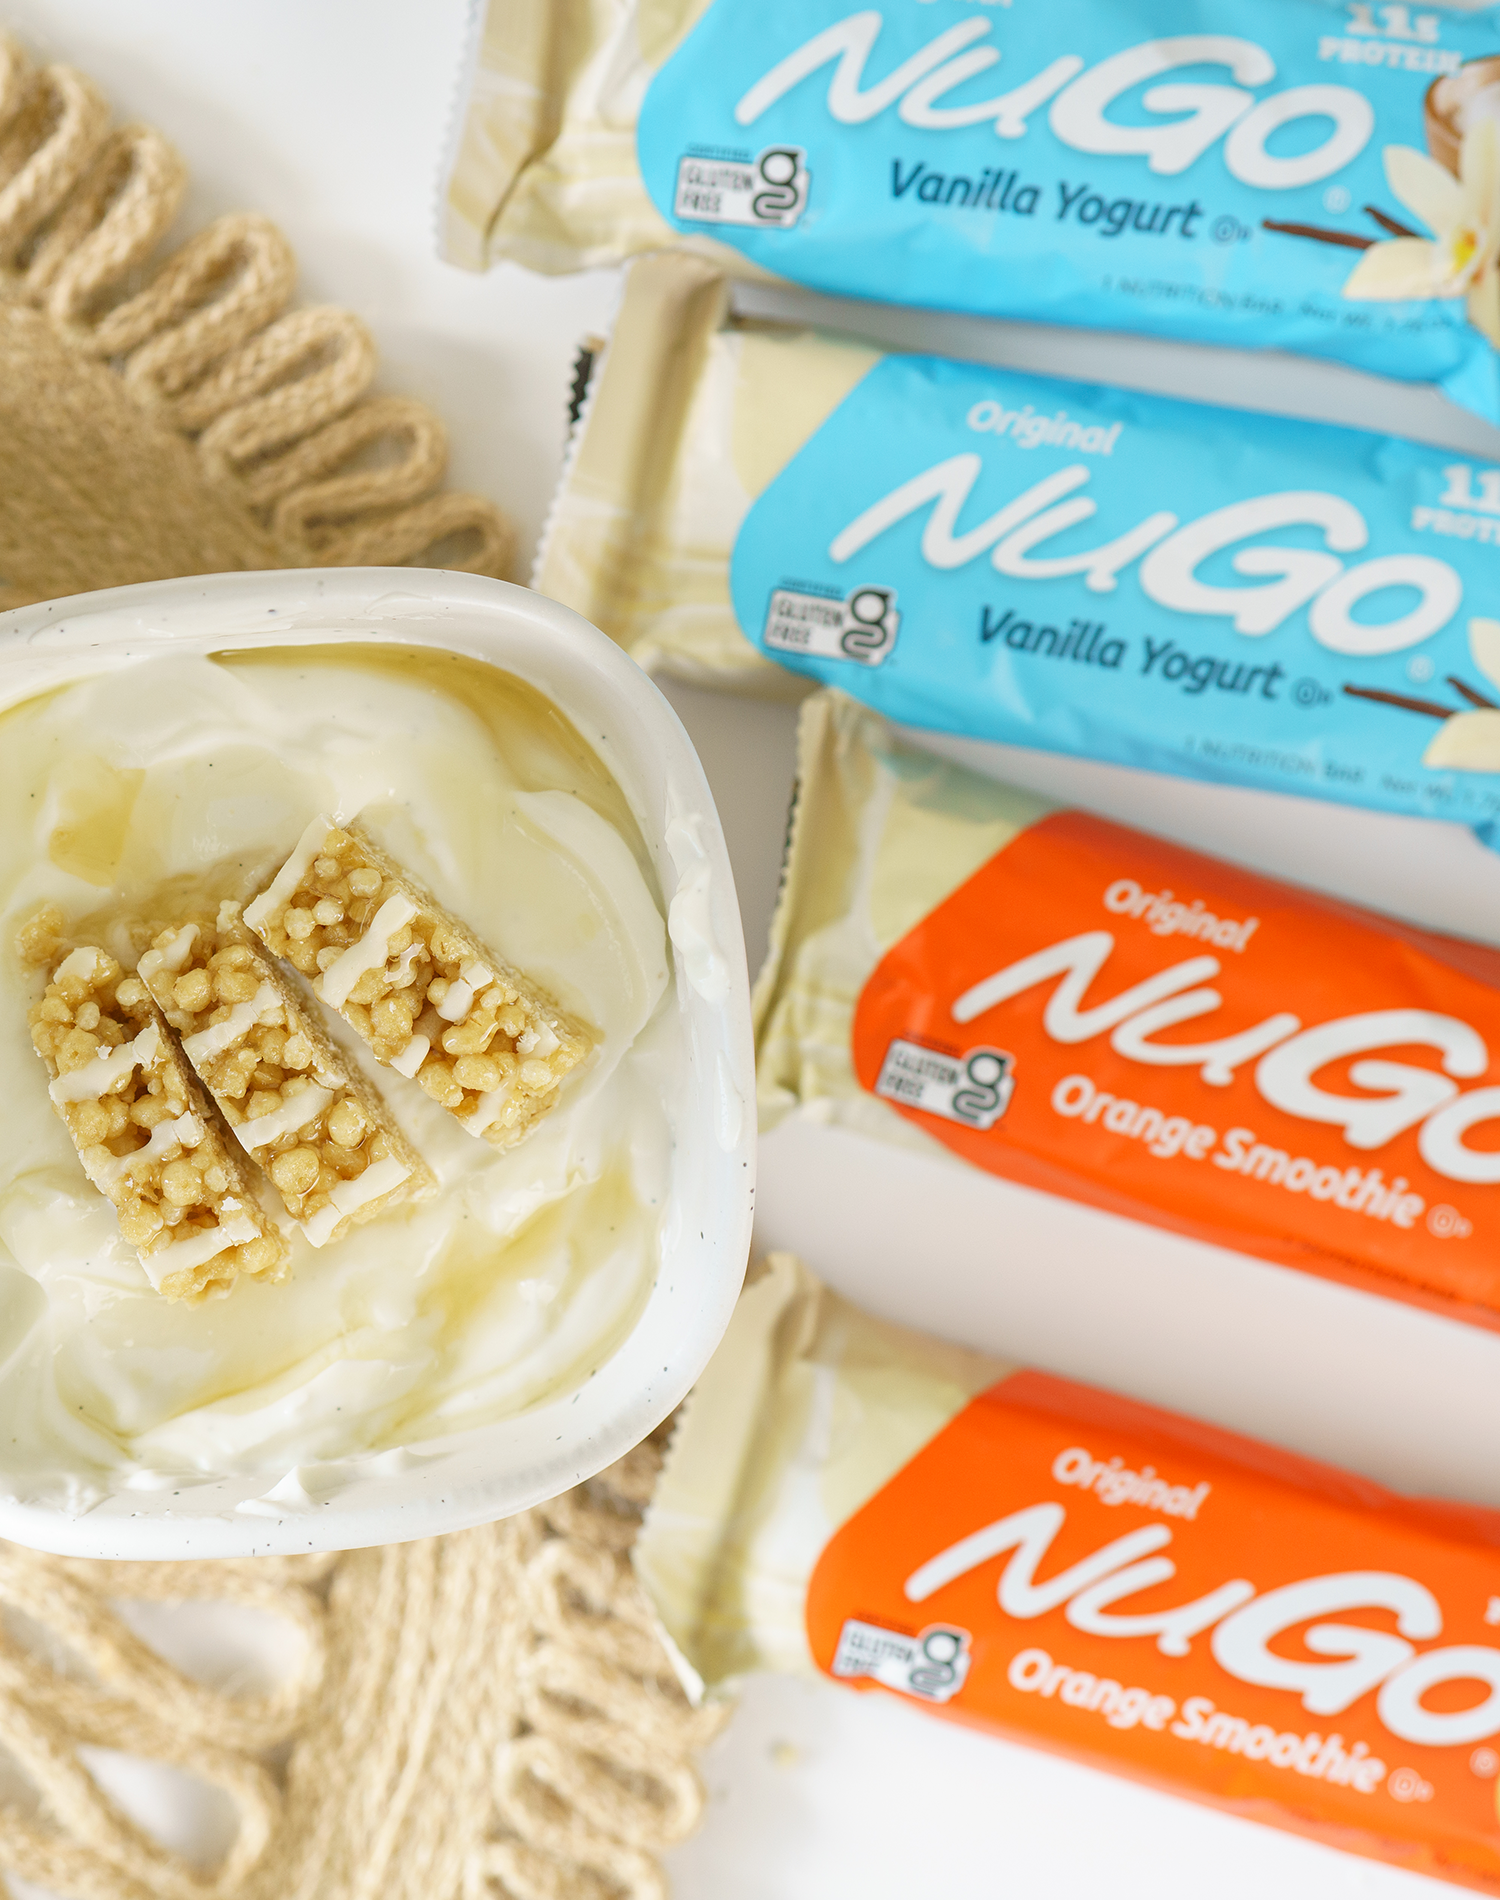 NuGo Original Vanilla Yogurt and Orange Smoothie next to cup of yogurt with cut bars on top